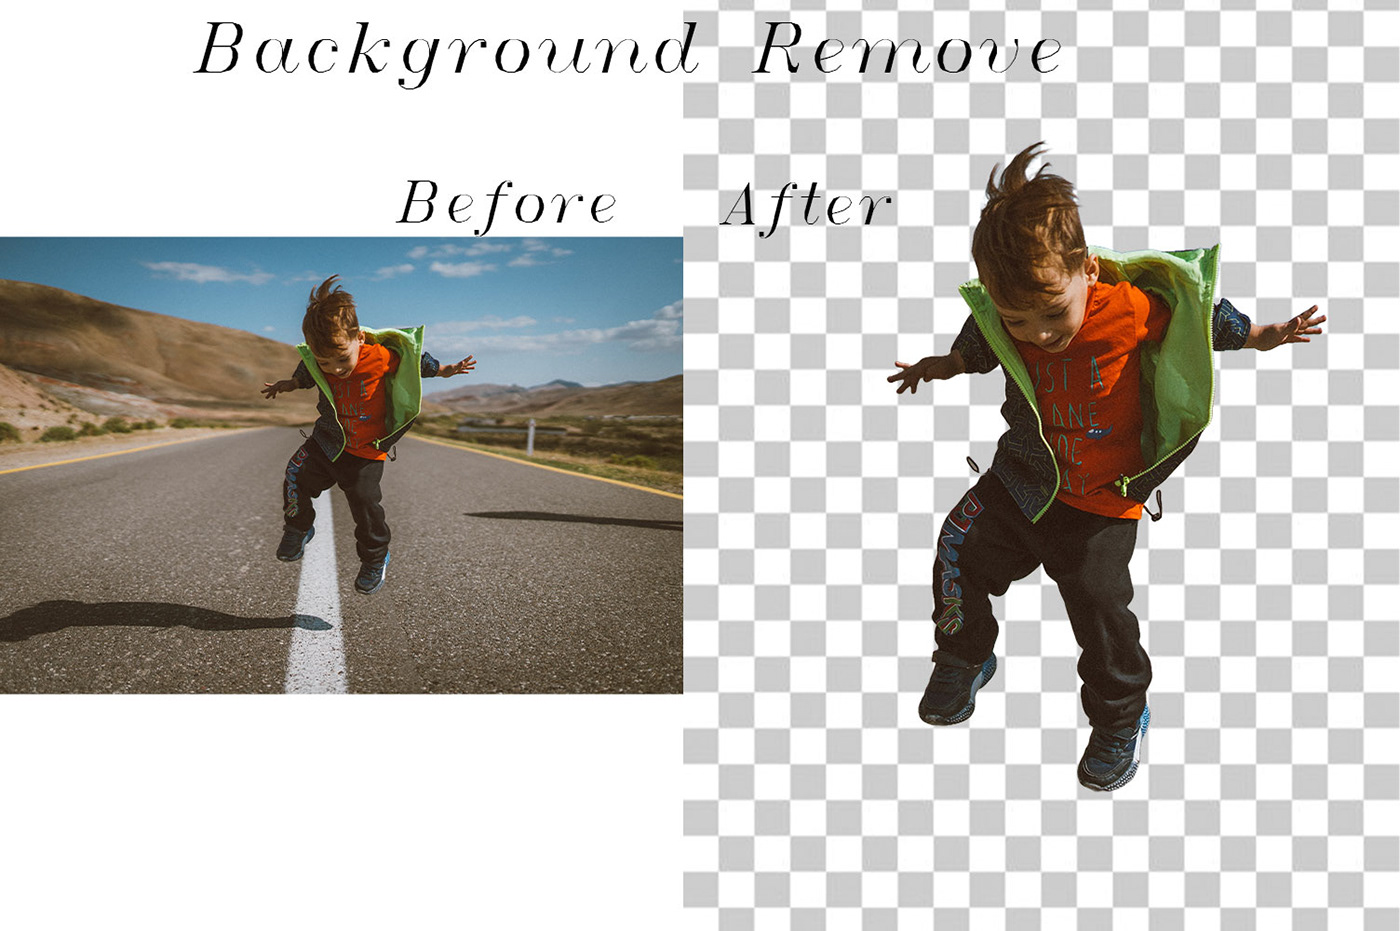 remove background Background Remove Background removal object remove removebackground object removal cutout remove object